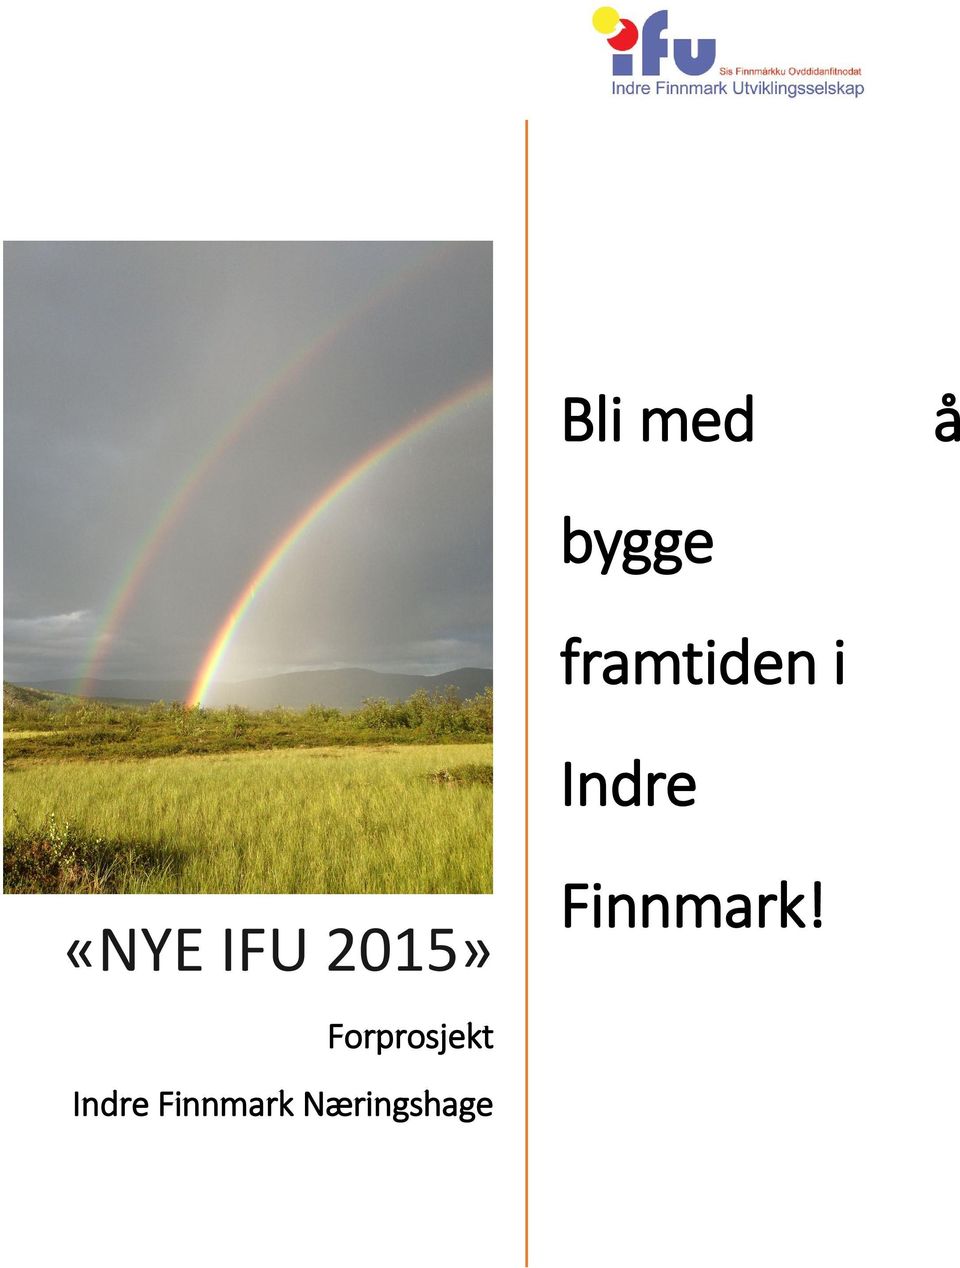 IFU 2015» Finnmark!